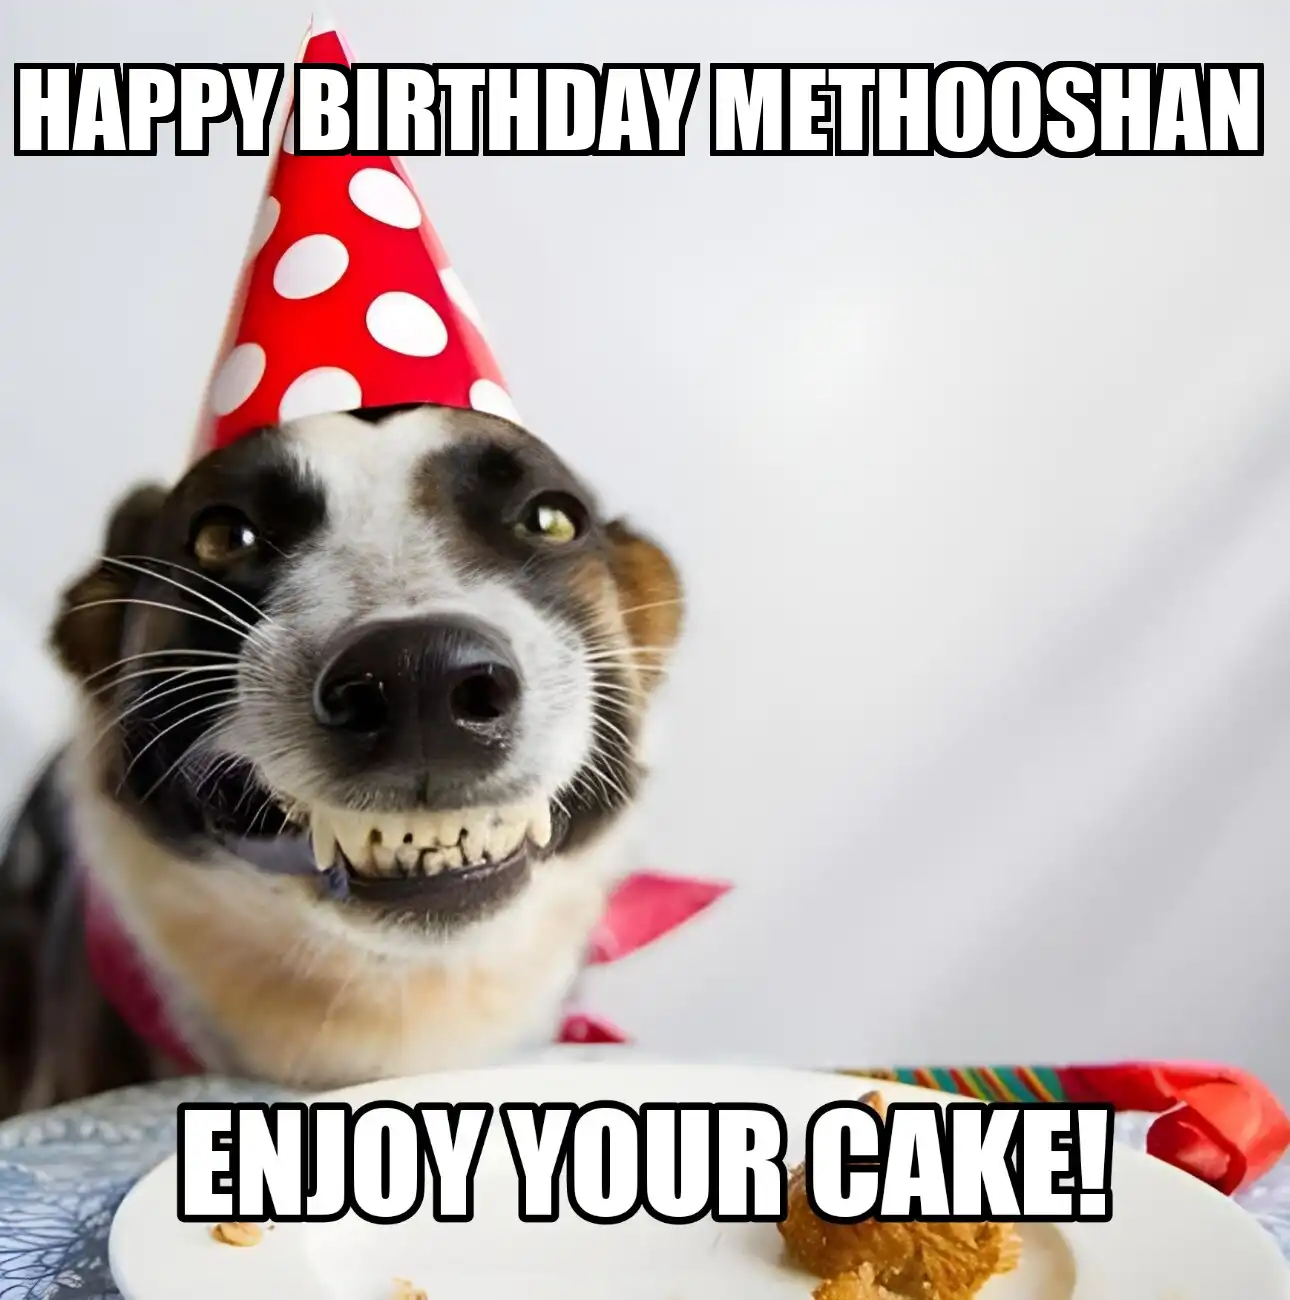 Happy Birthday Methooshan Enjoy Your Cake Dog Meme